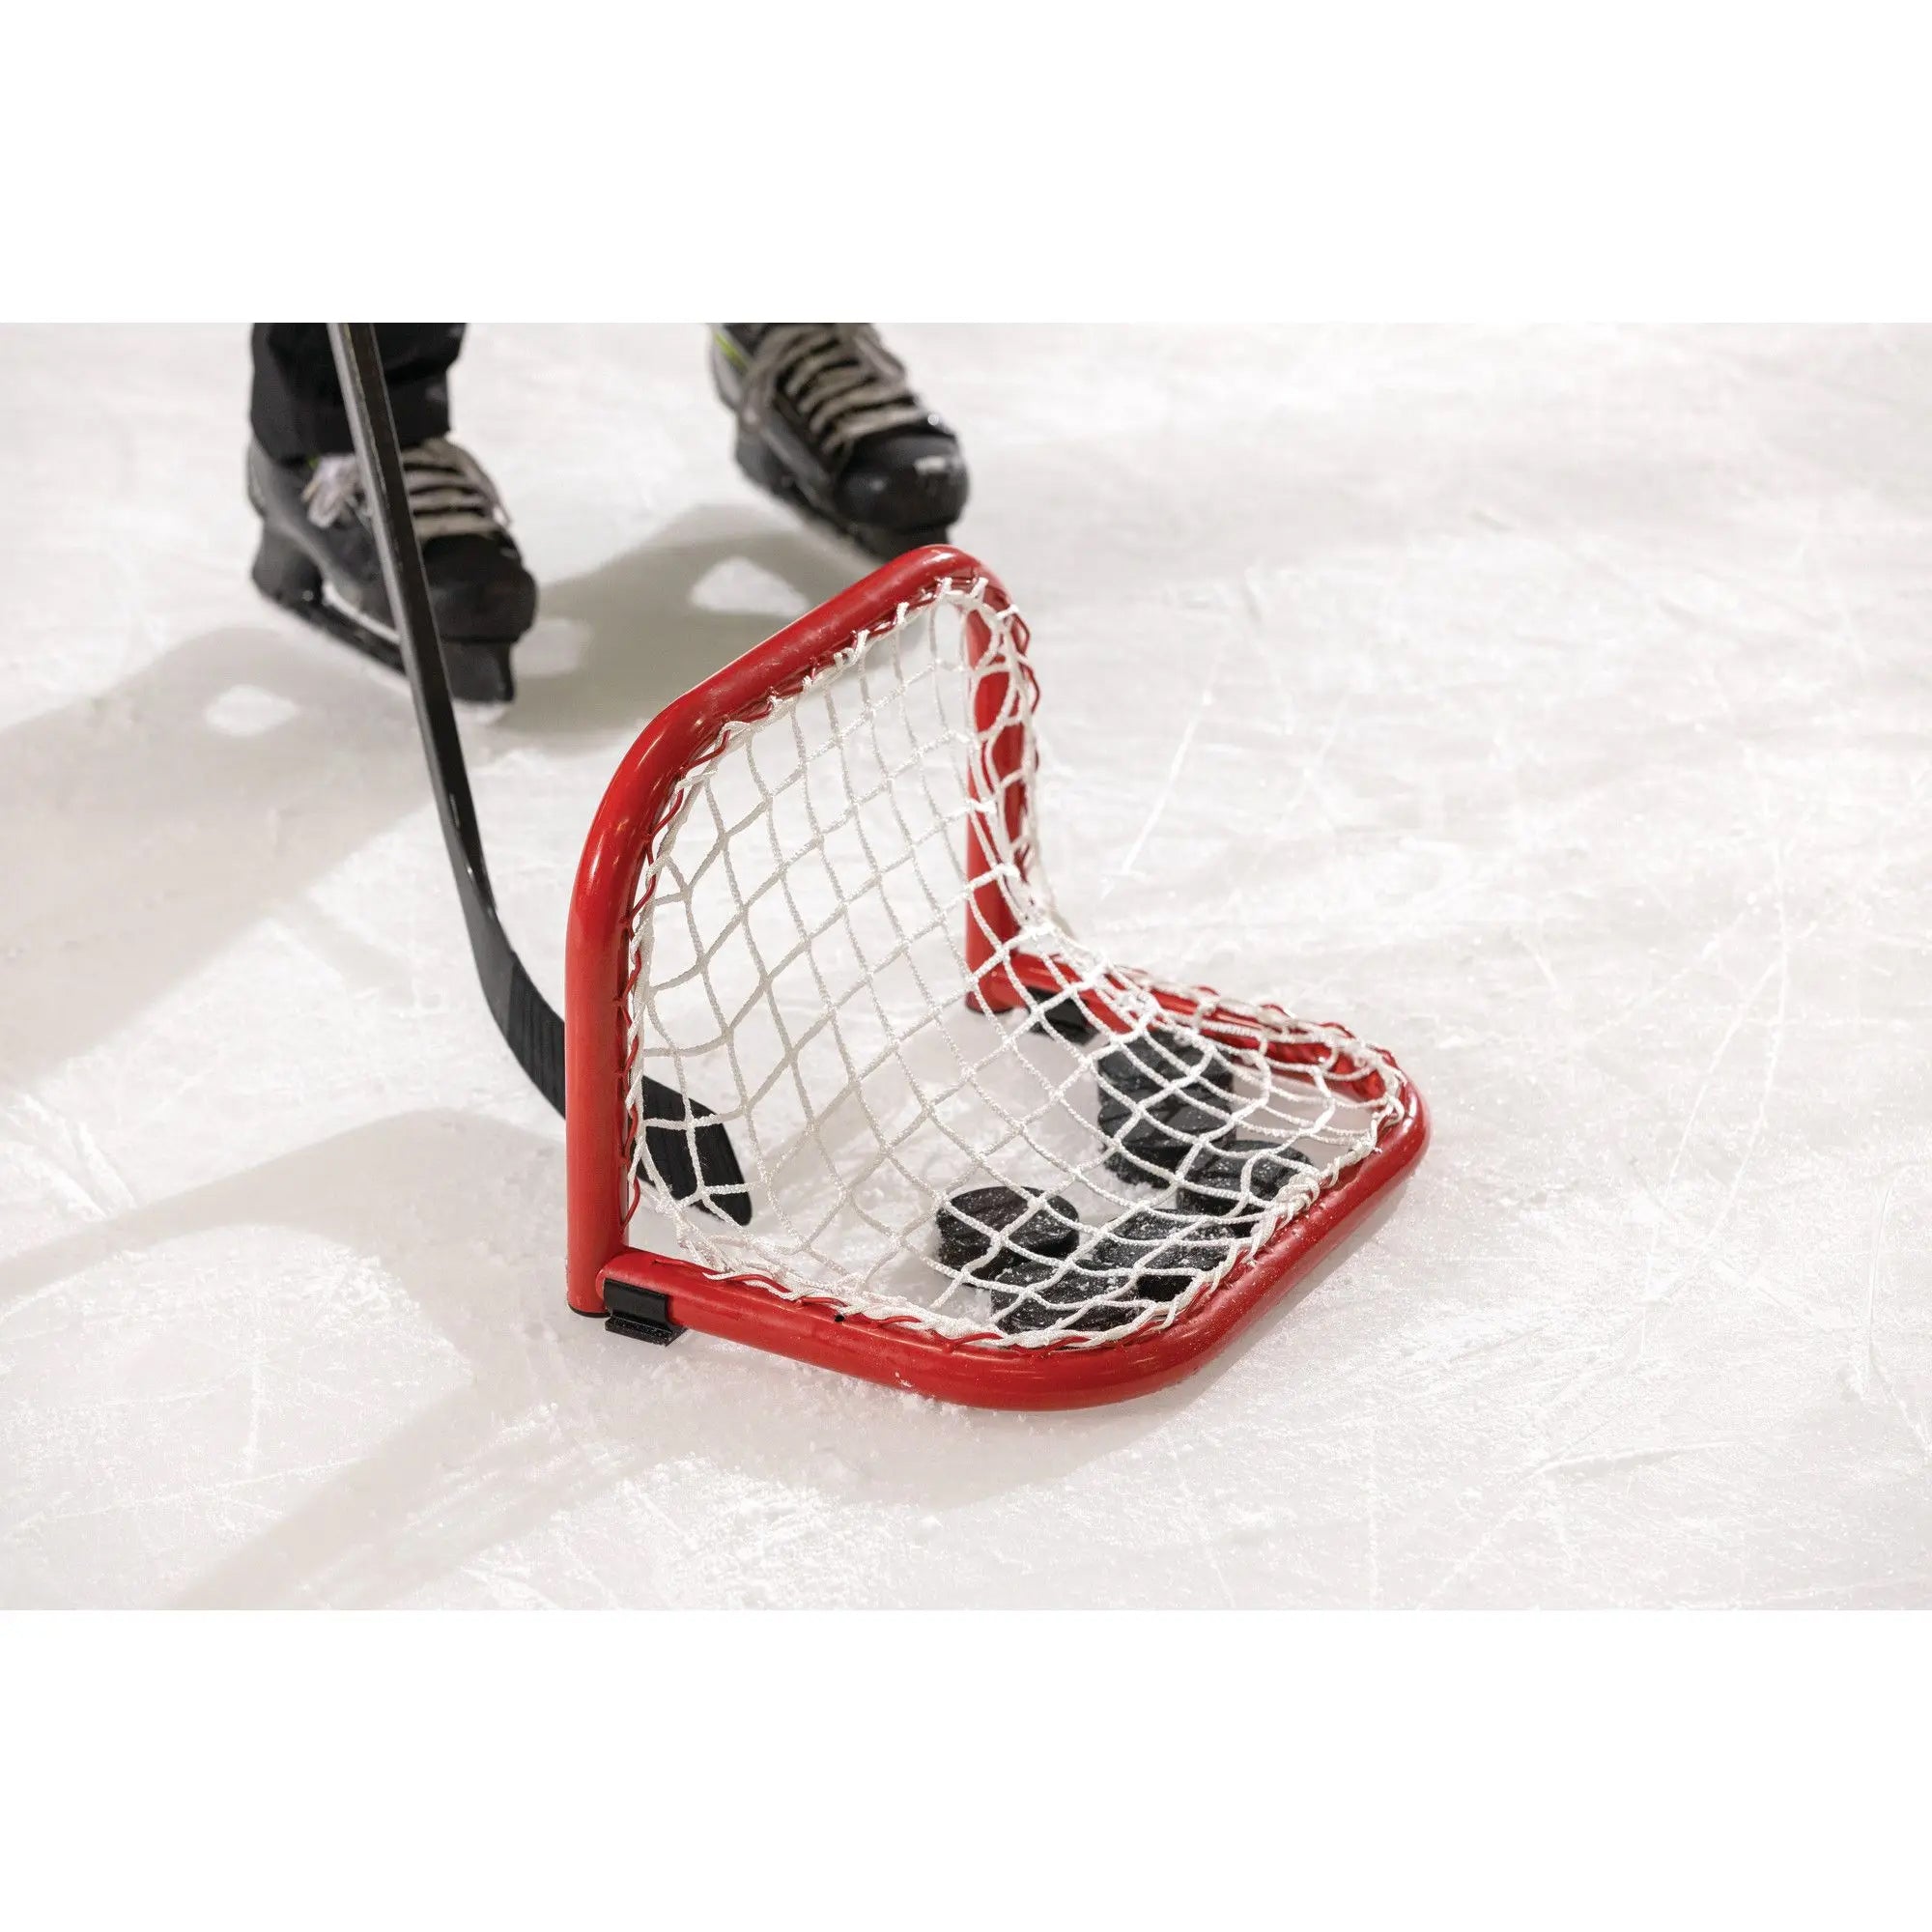 SKLZ Ice Hockey Mini Passing Target - Red/White SKLZ